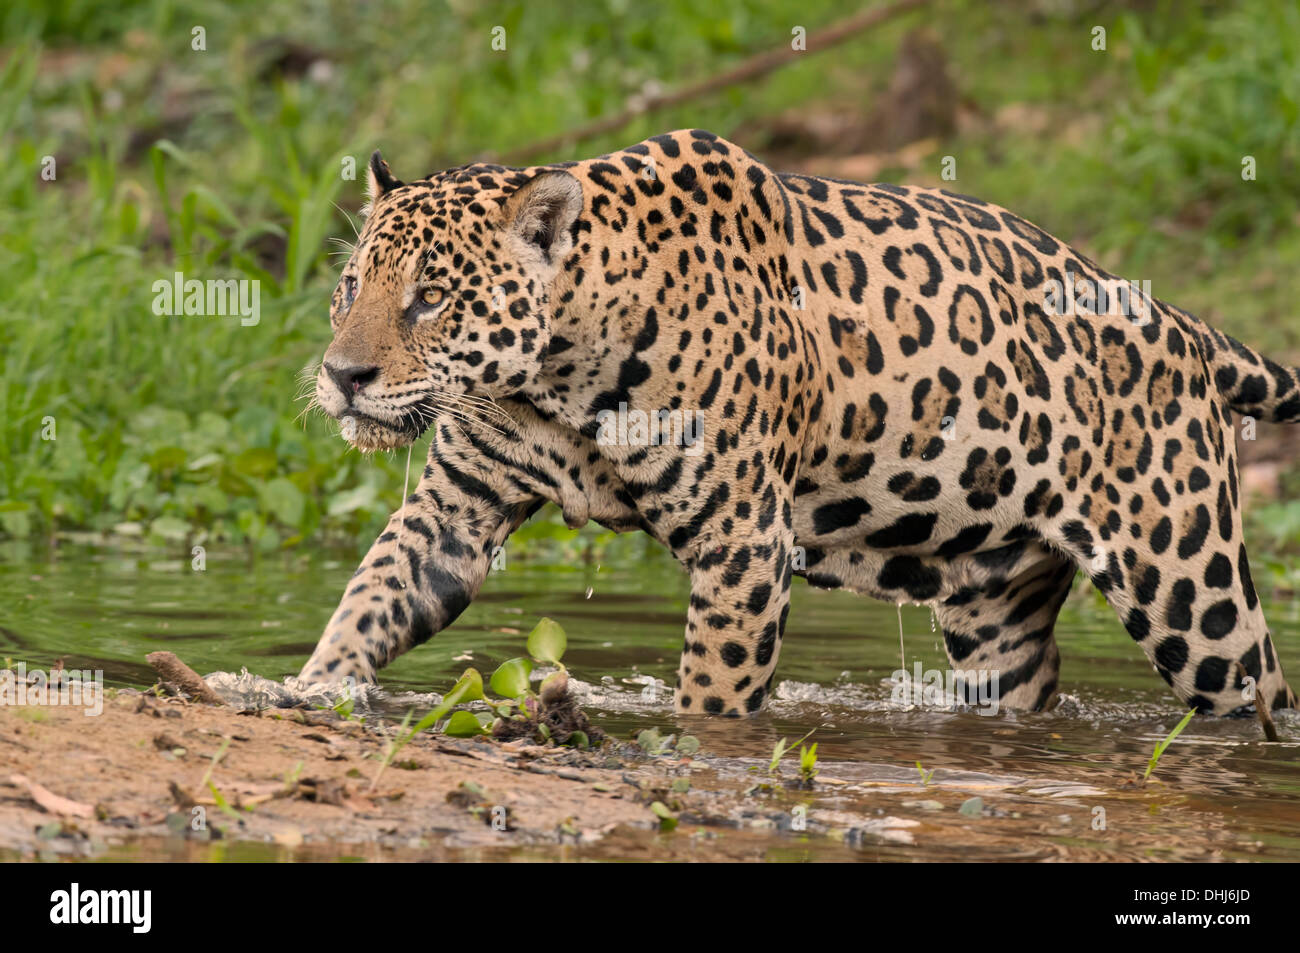 Stock Foto von einem Jaguar verlassen den Bach, Pantanal, Brasilien. Stockfoto